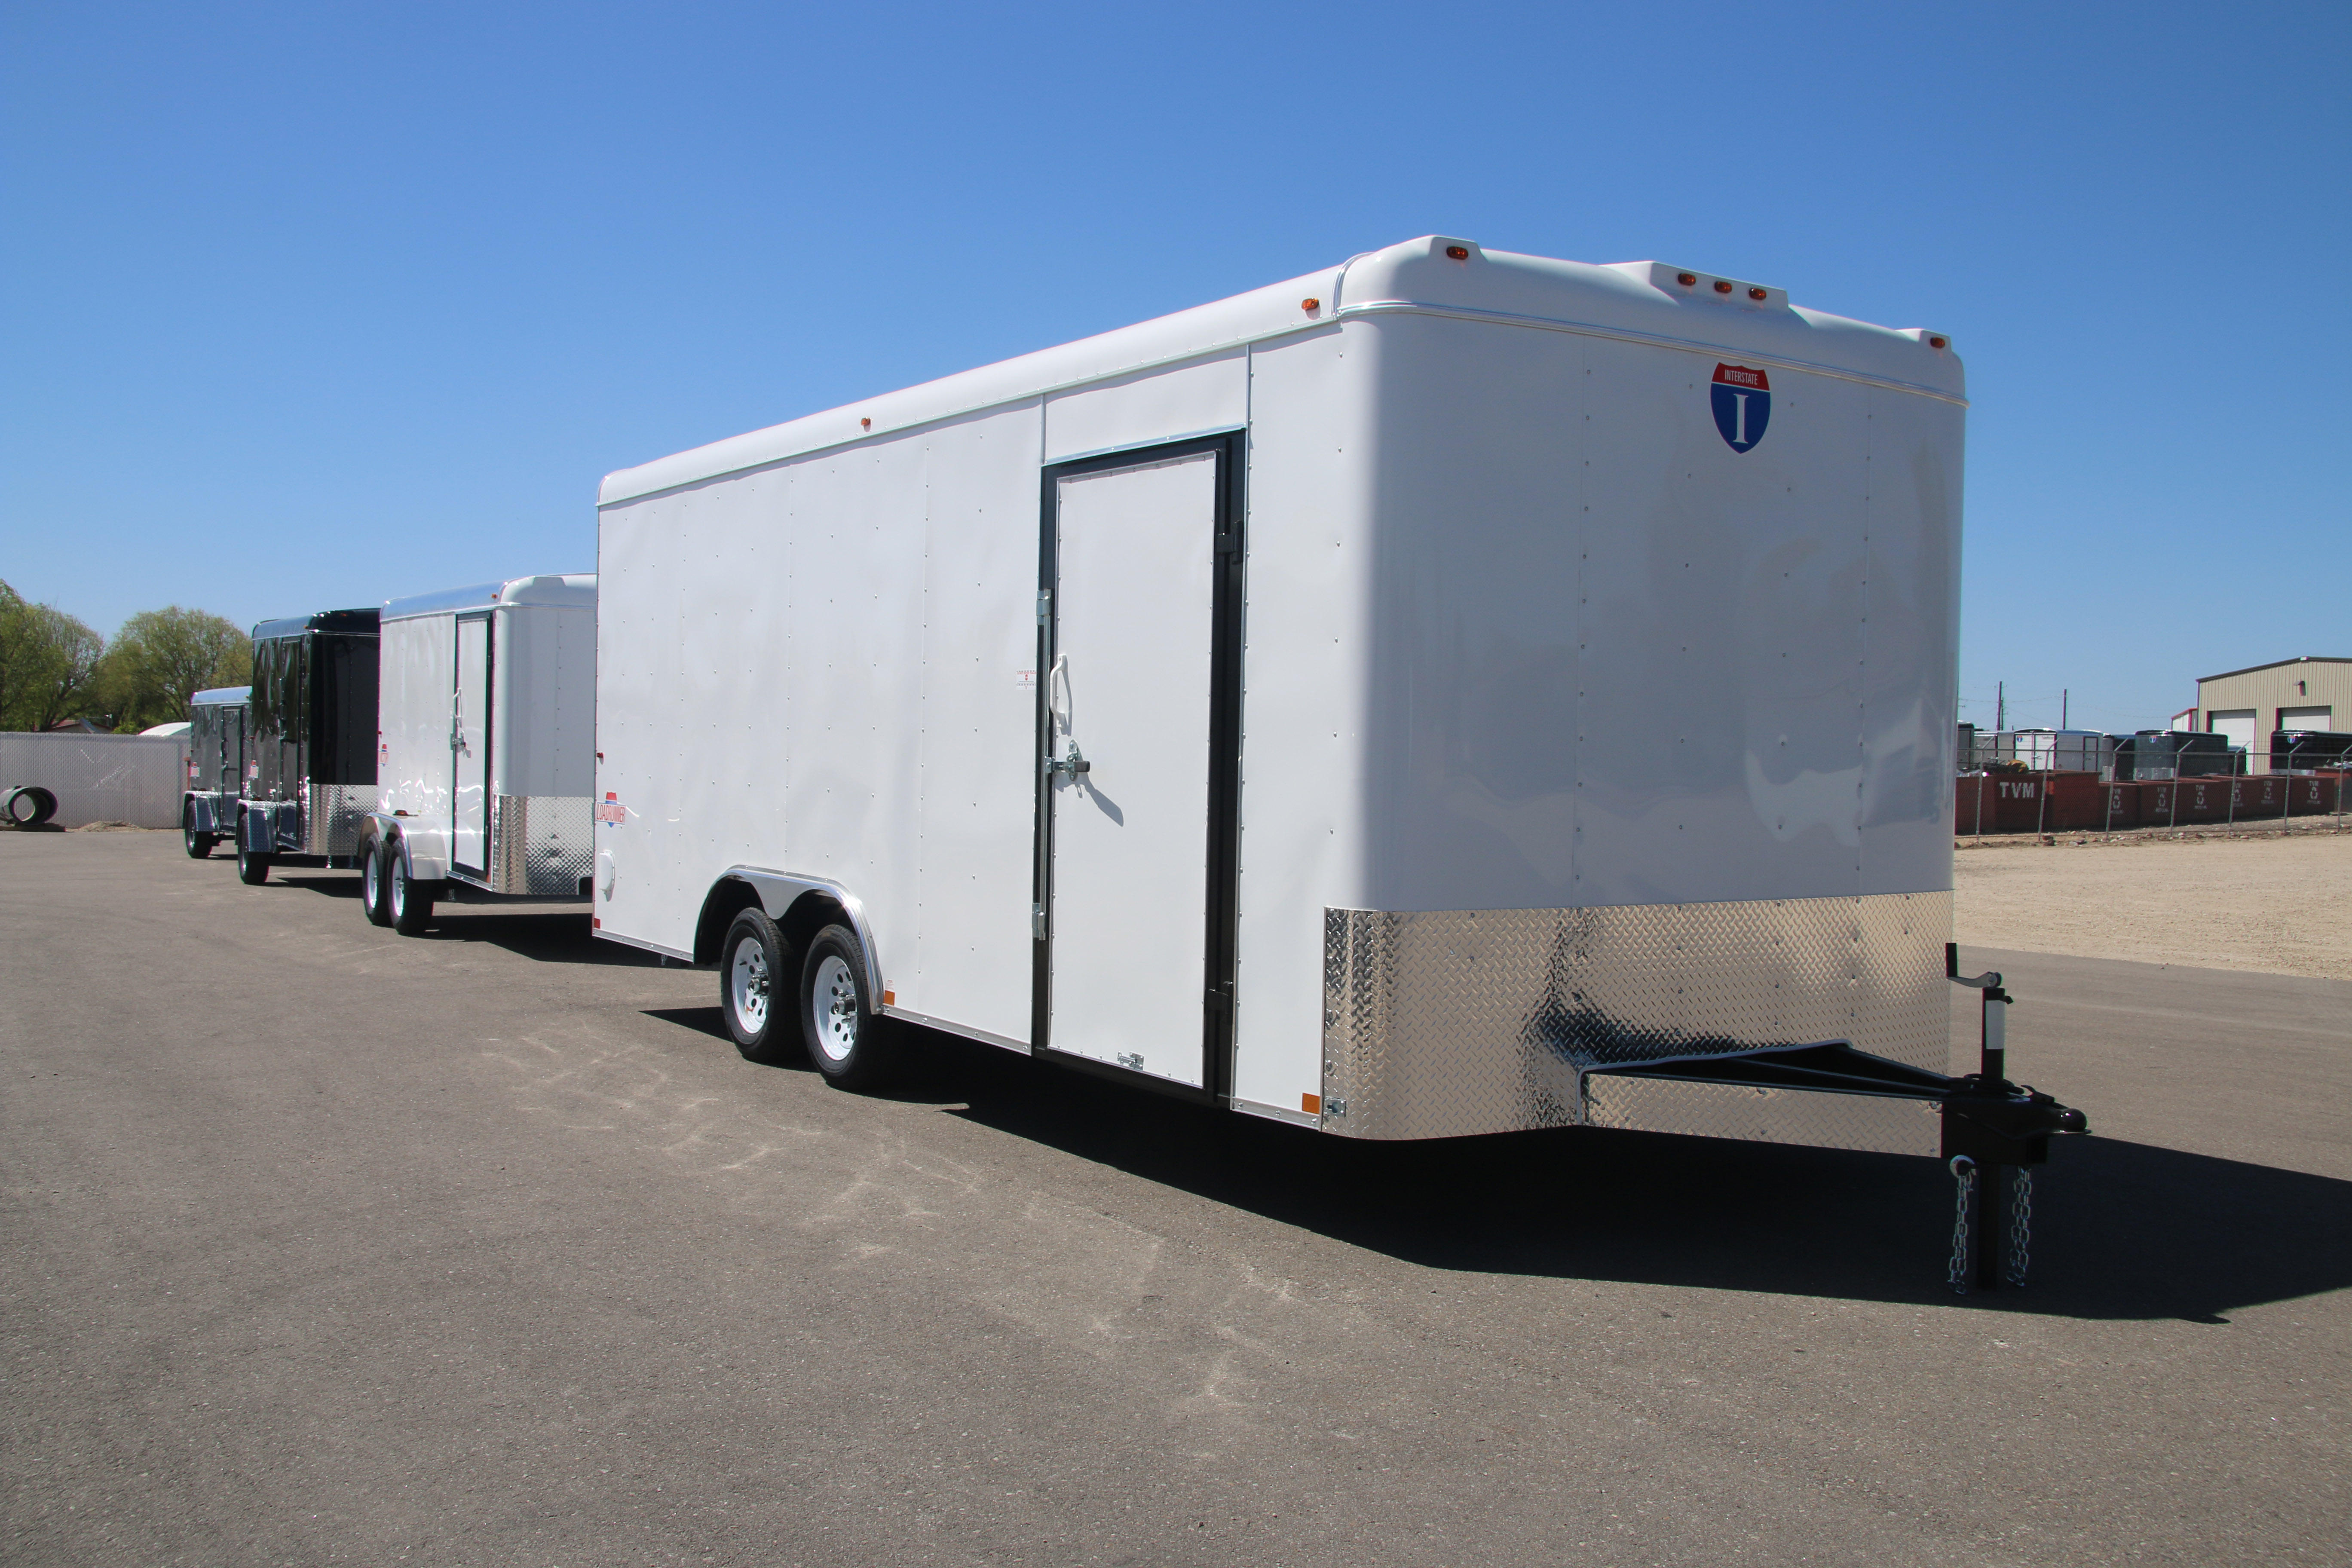 White 8.5' wide tandem cargo trailer TrailersPlus Fort Collins (970)818-0670